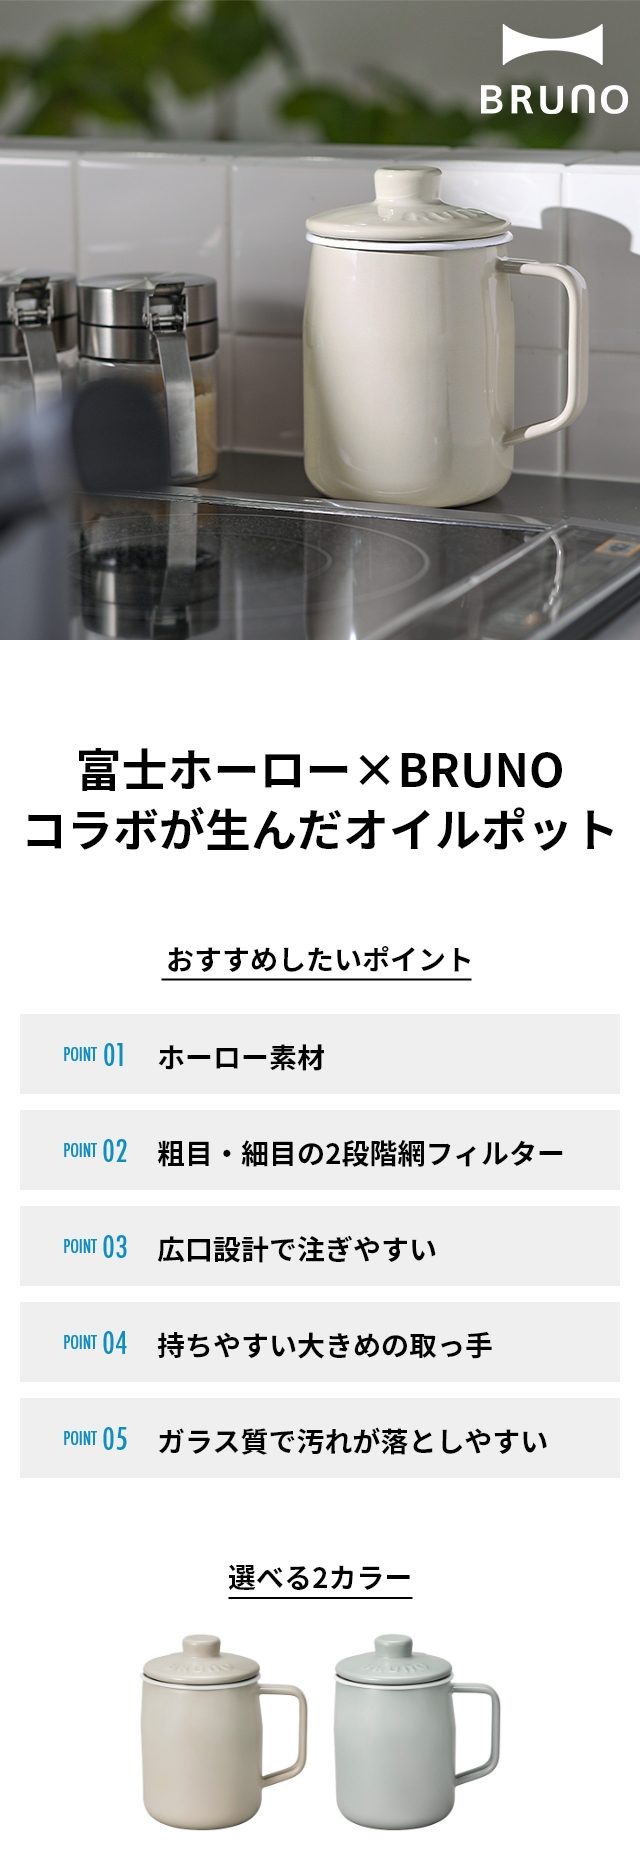 BRUNO (ブルーノ) ホーローオイルポット 1.0L BHK297